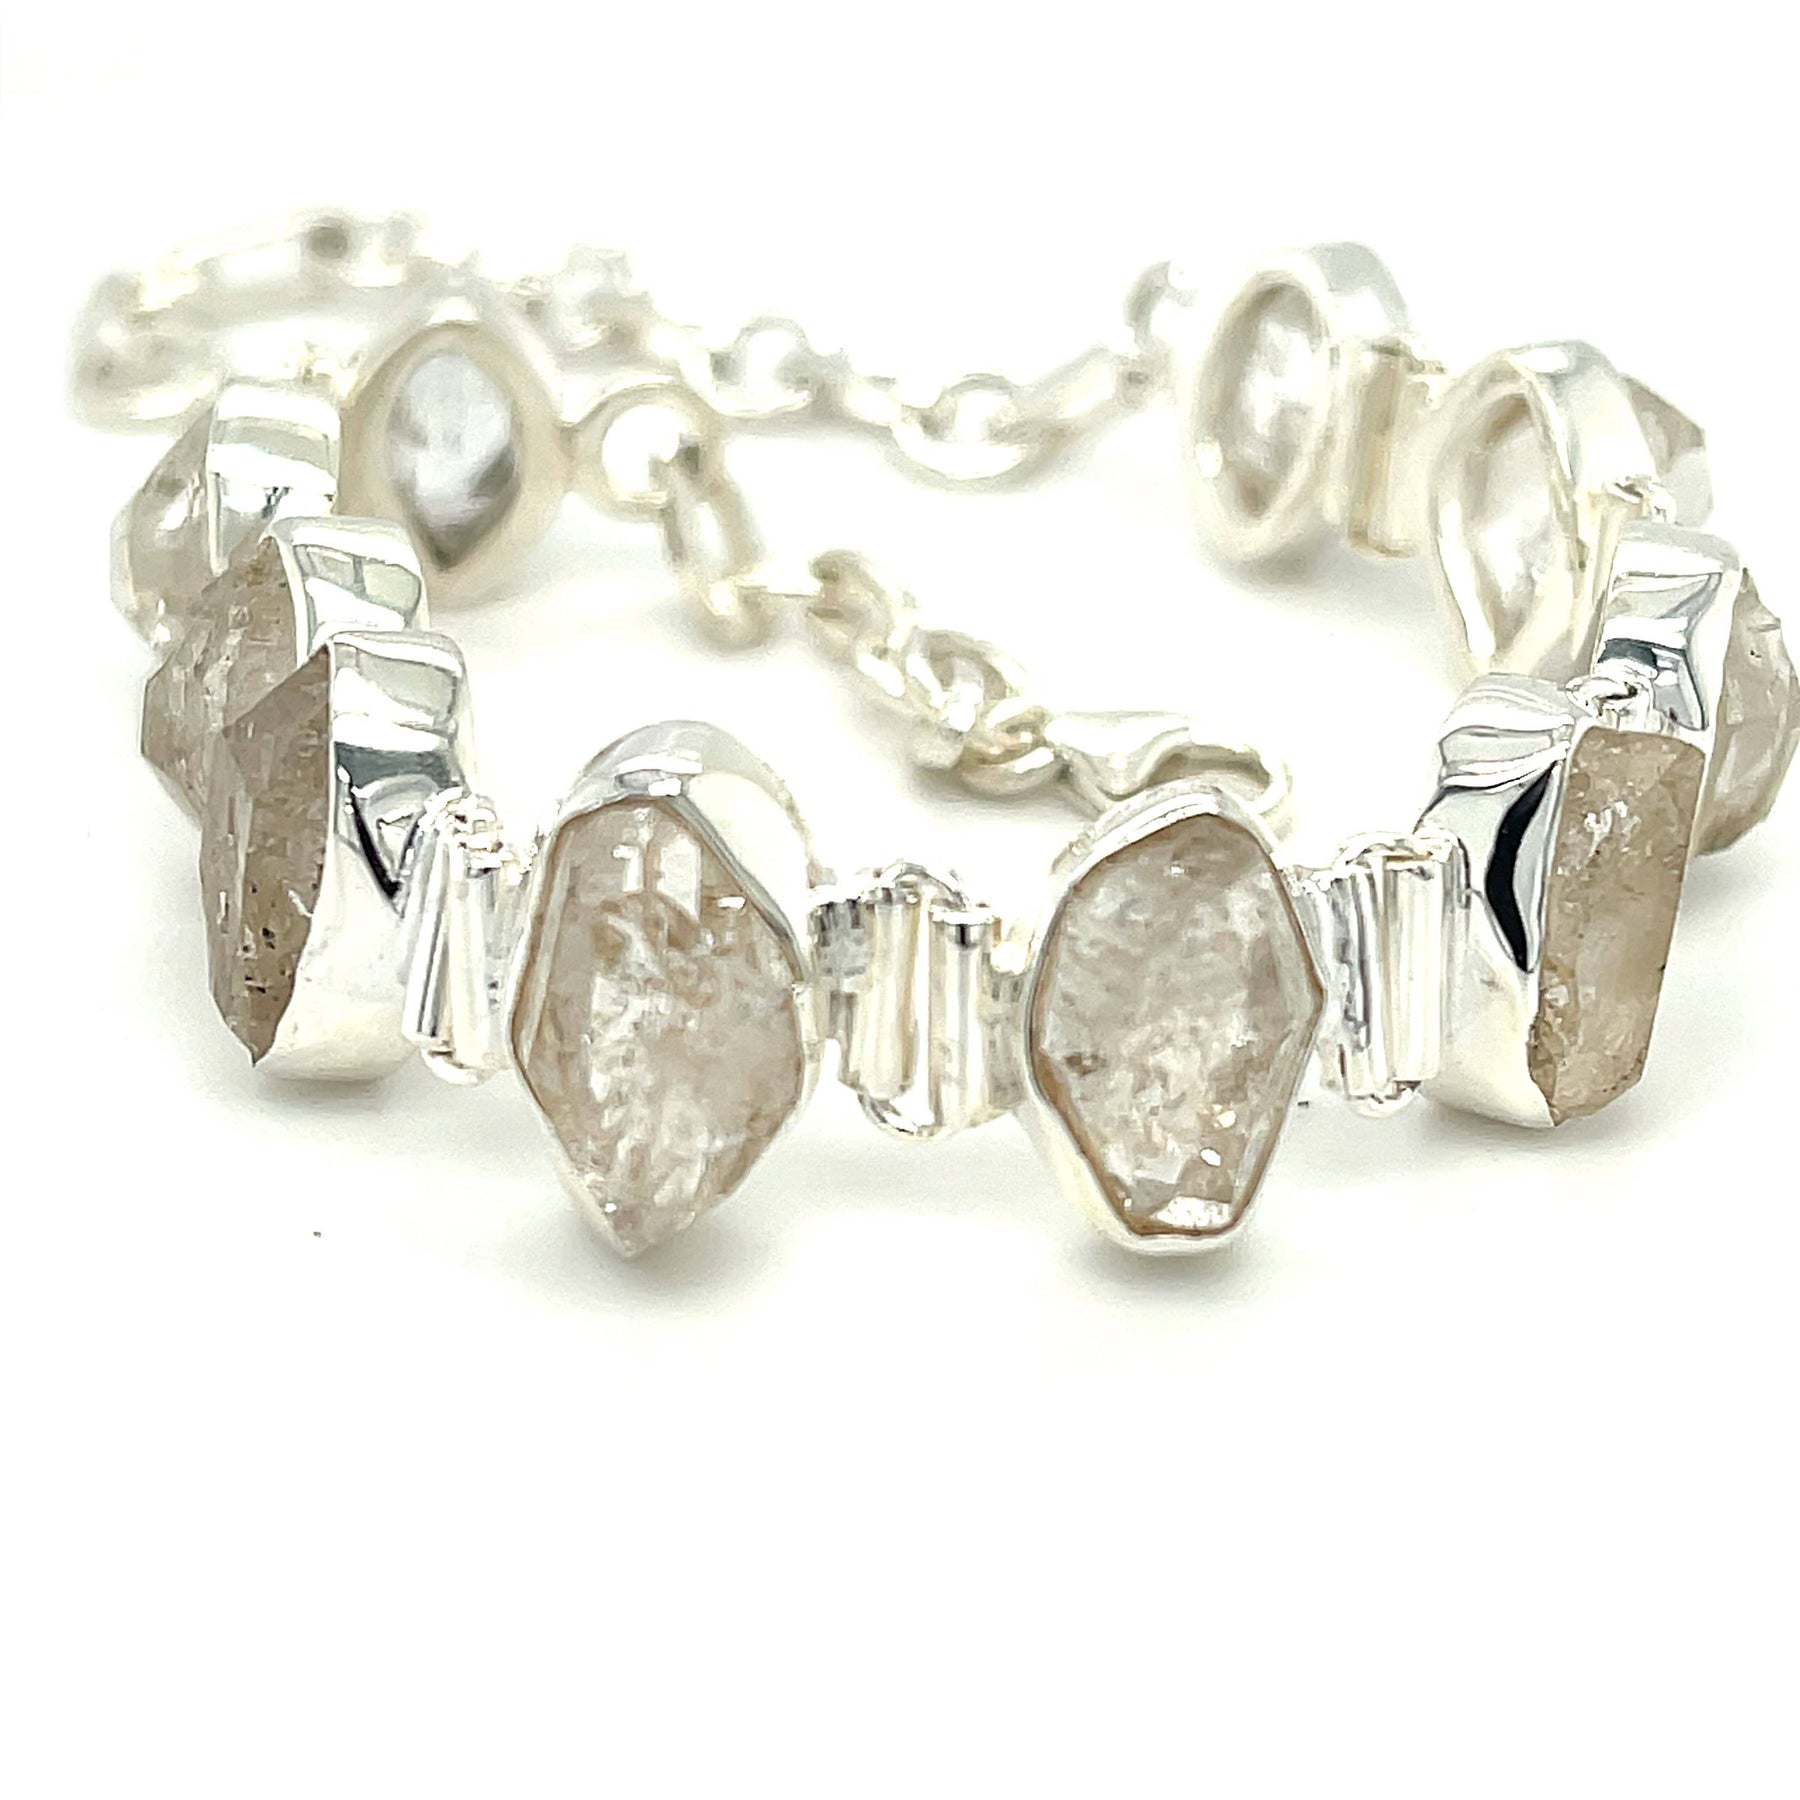 Herkimer Diamond Crystal Bracelet c/w cert闪灵钻/赫尔基蒙水晶手链*付证书 | Shopee Malaysia